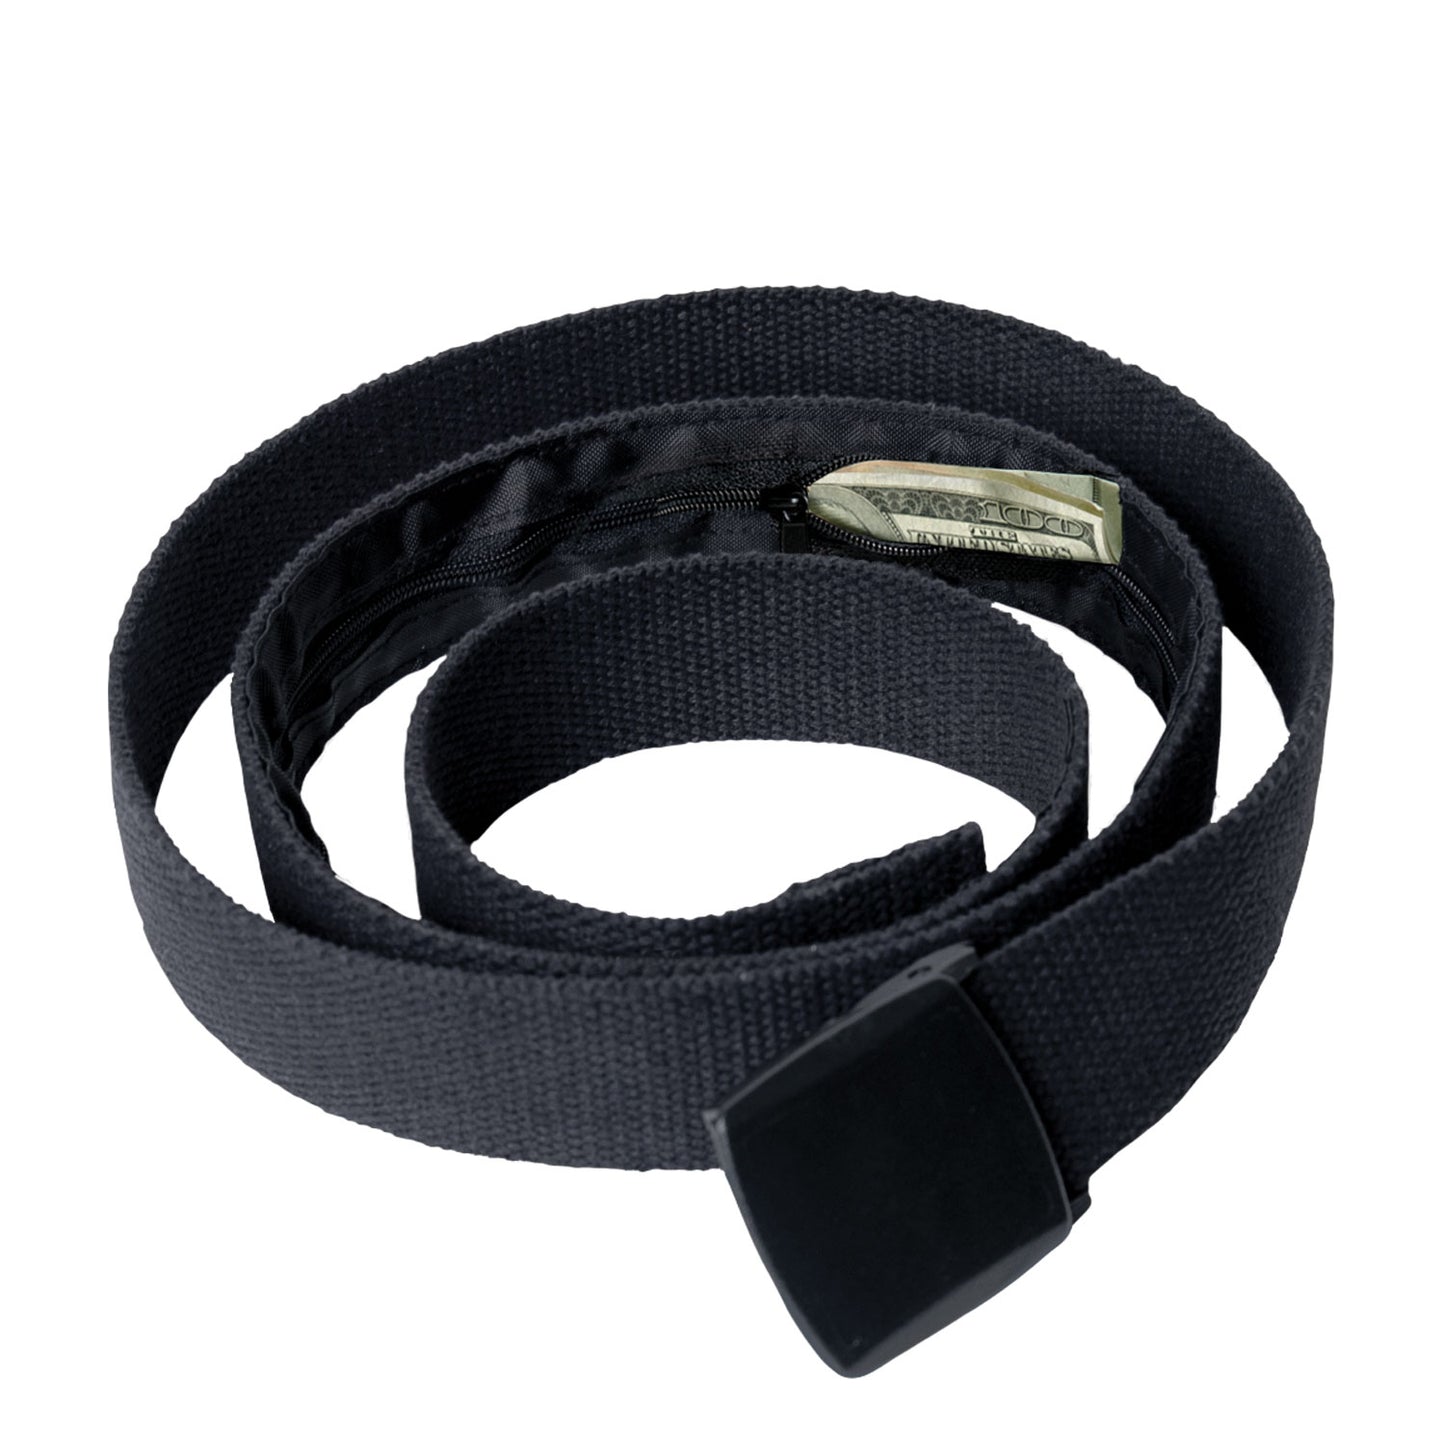 Rothco 54" Cotton Web Money Belt - Hidden Zippered Pocket Within The Belt